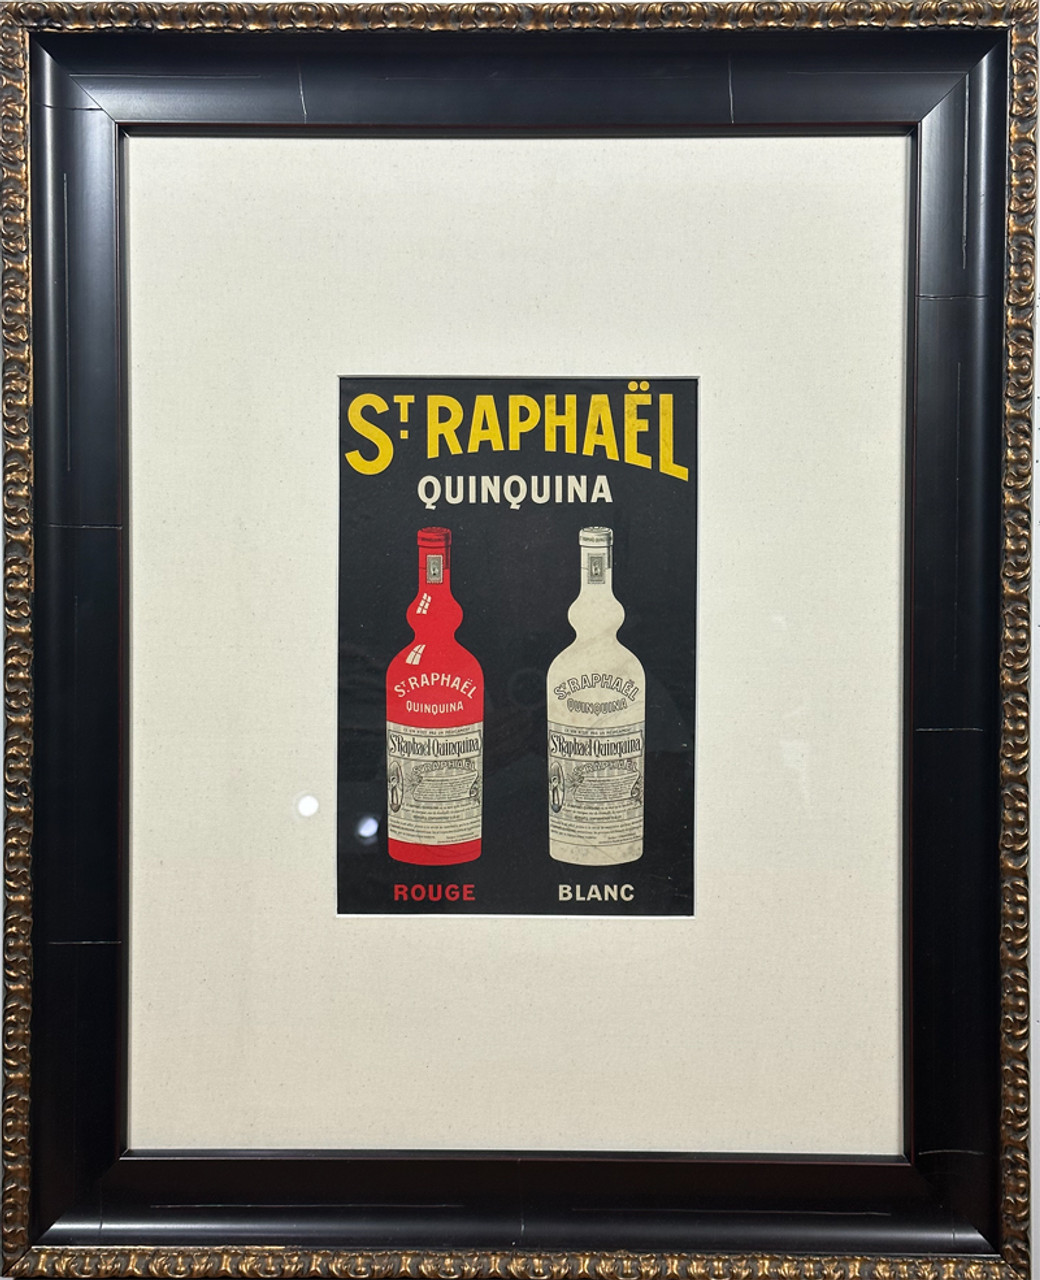 St. Raphael Quinquina Bottles original lithograph on board menu cover 20th century France vintage poster